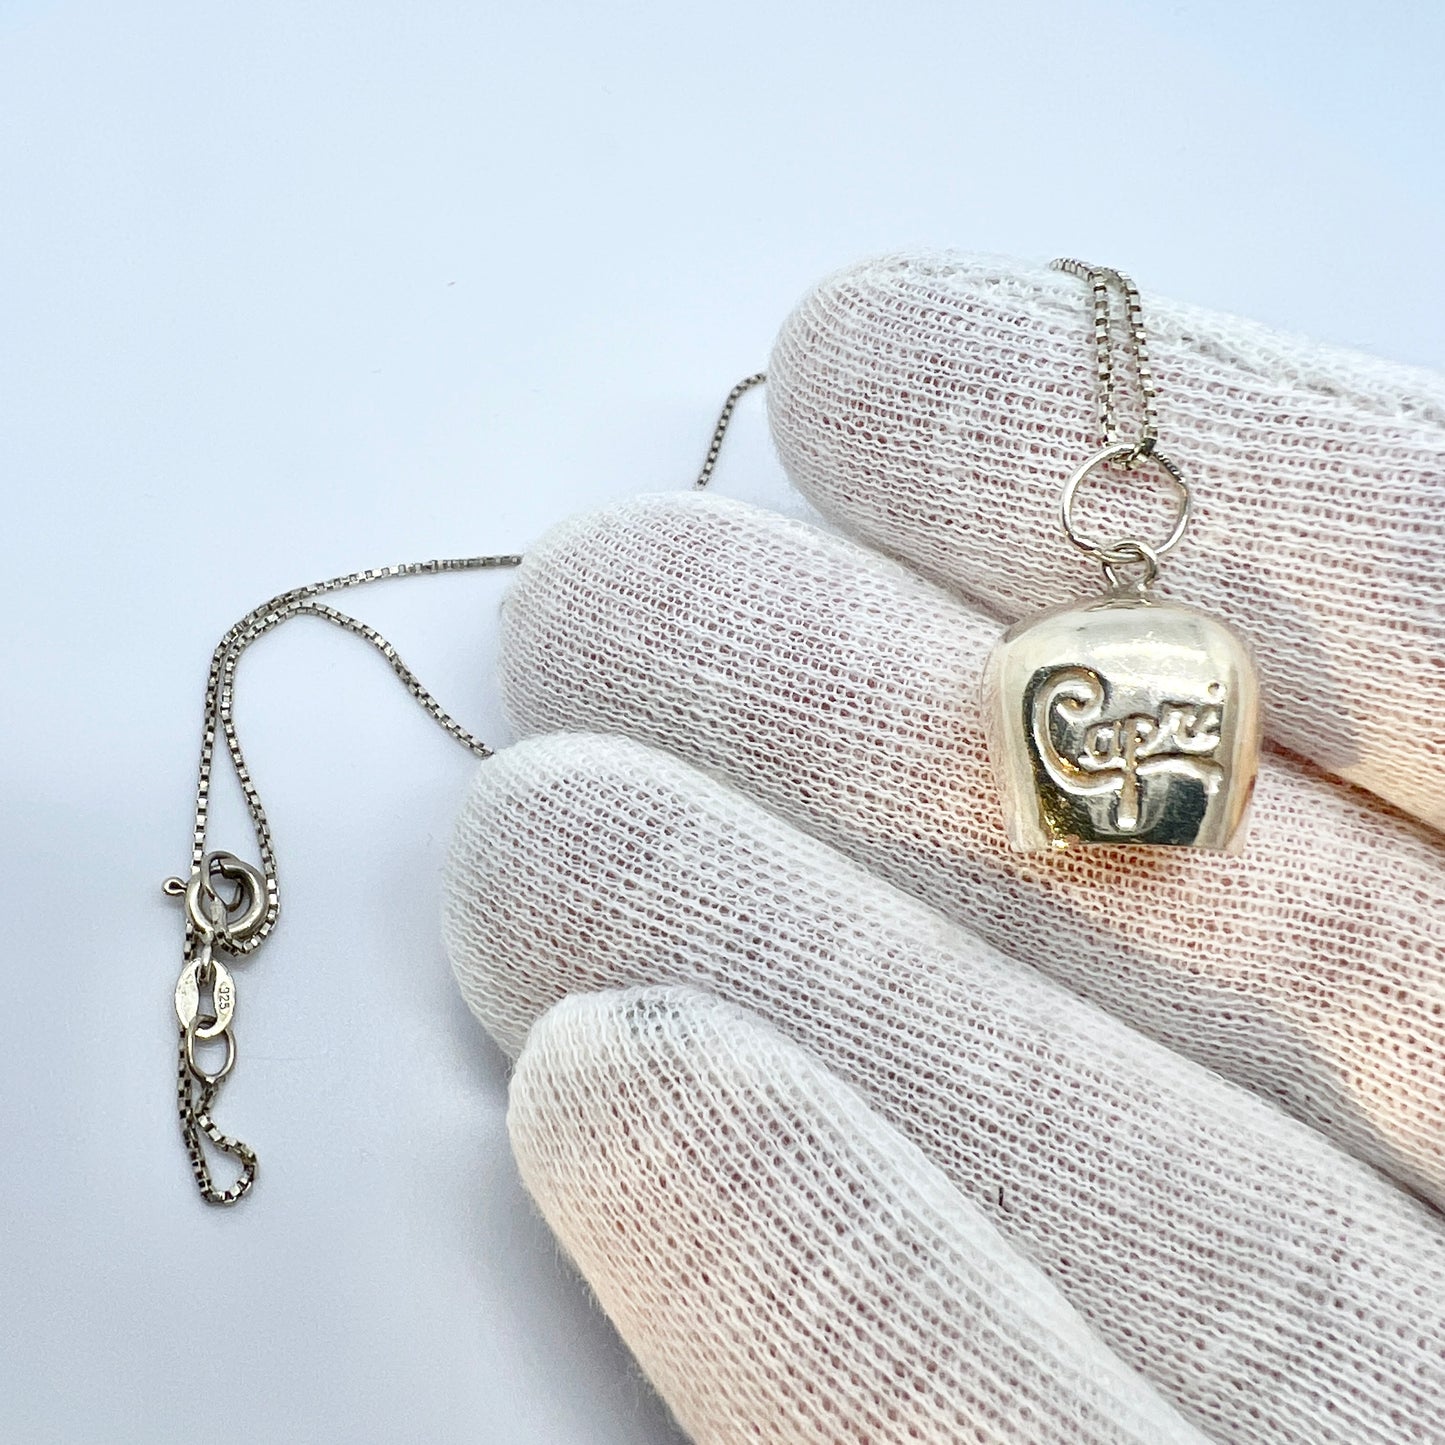 Capri, Italy. Vintage Sterling Silver Souvenir Pendant Necklace.